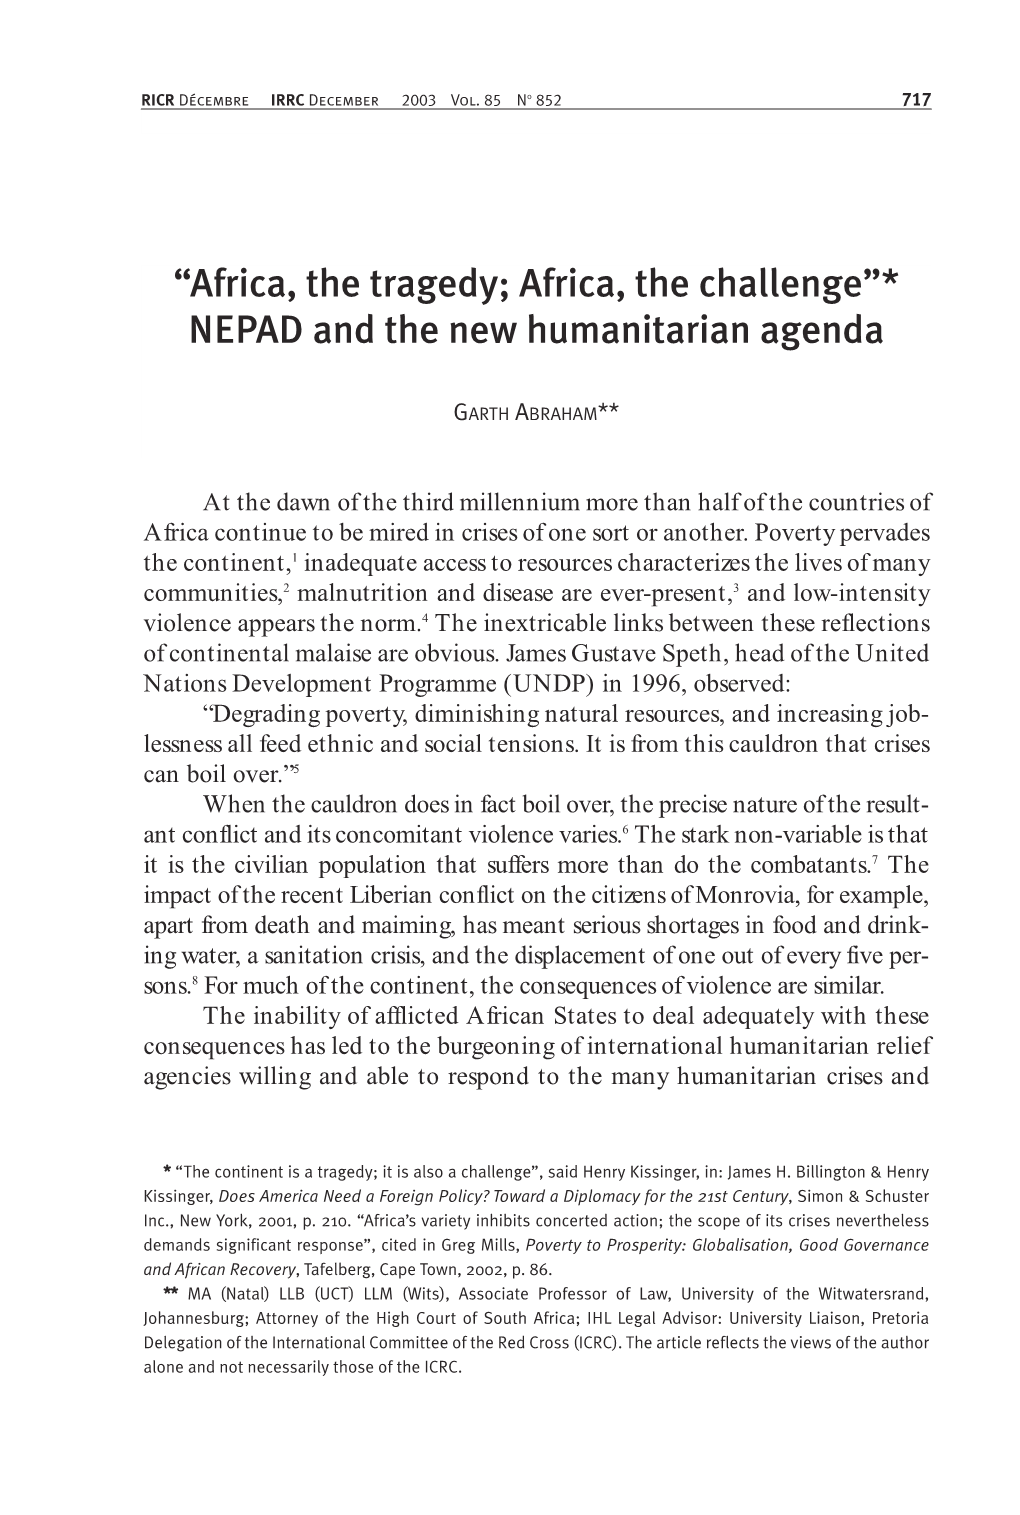 Africa, the Challenge : NEPAD and the New Humanitarian Agenda